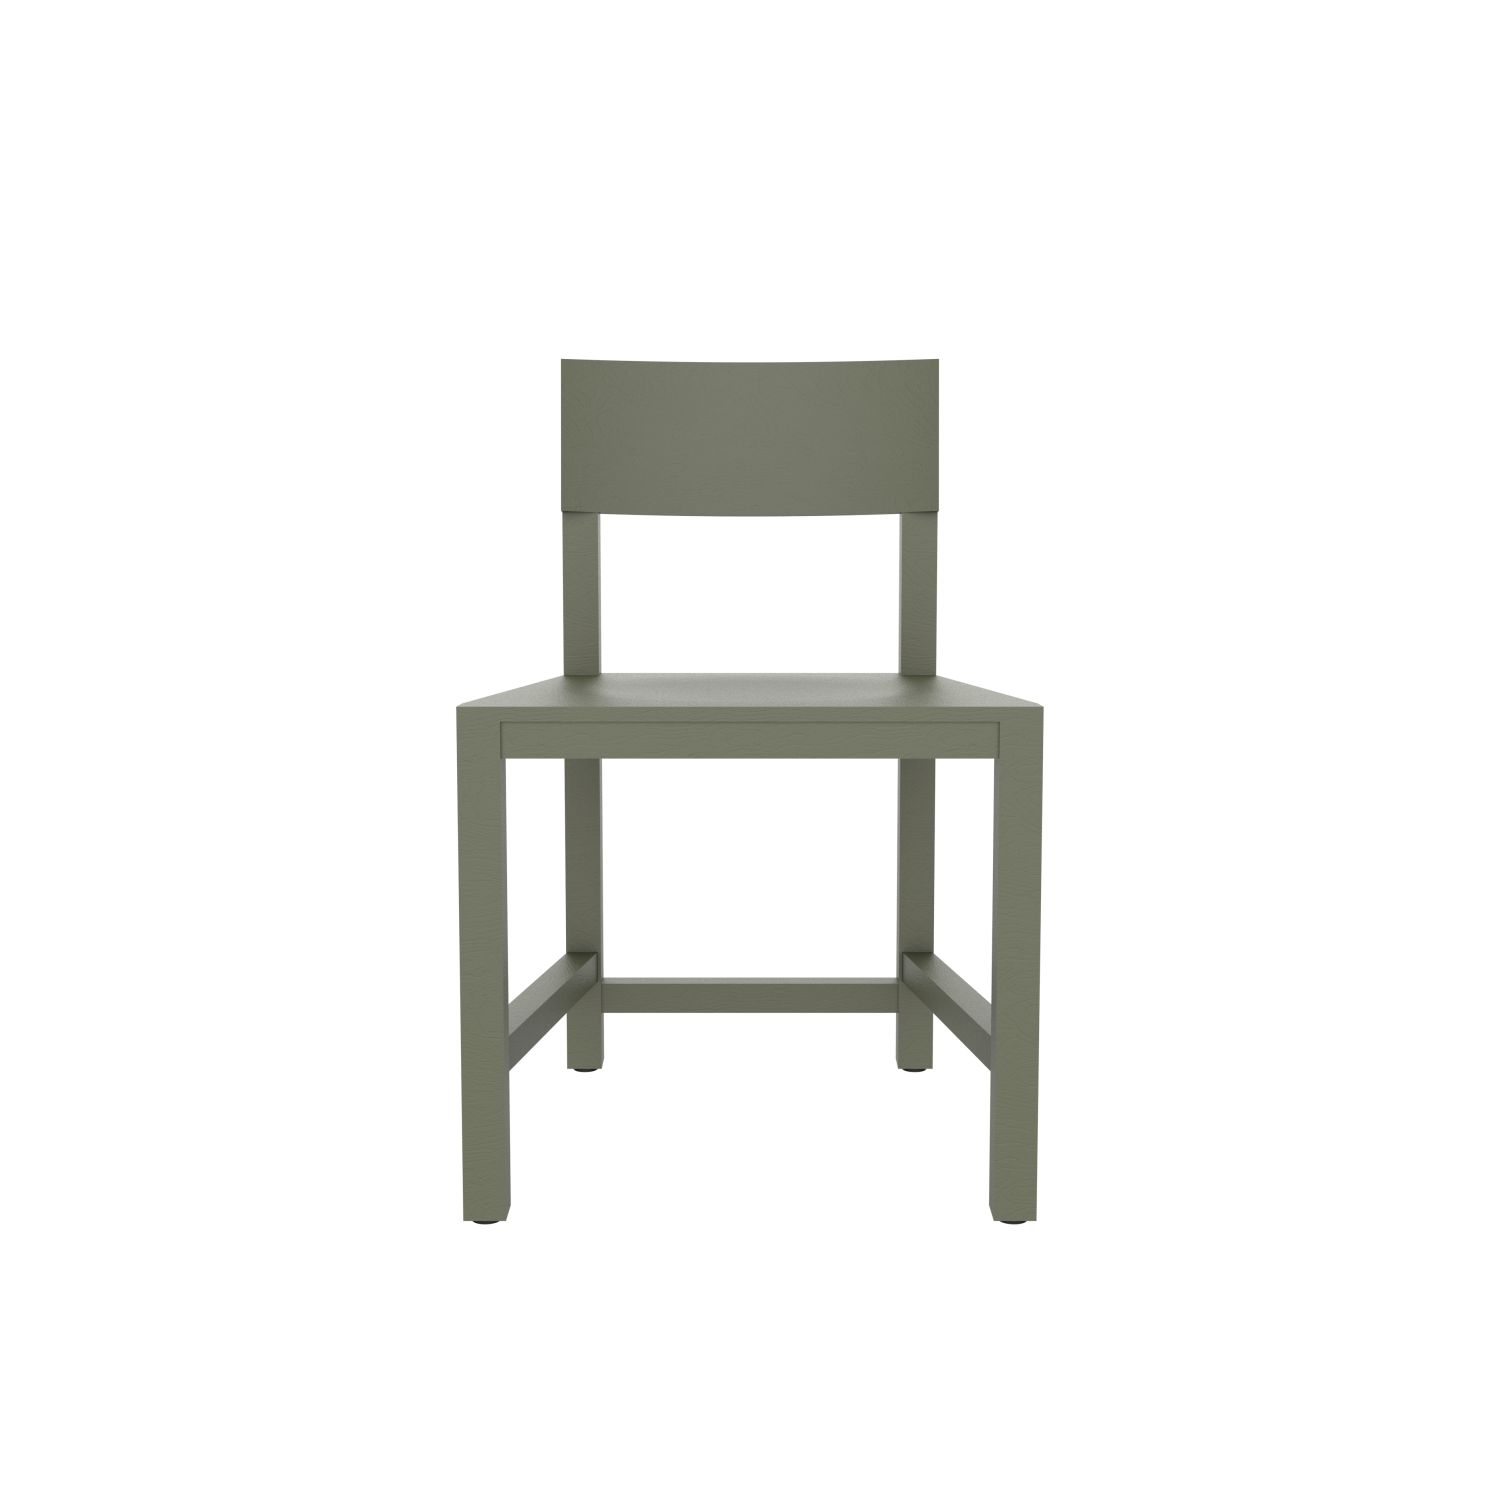 atelier van lieshout shaker chair olive green ral6003 hard leg ends